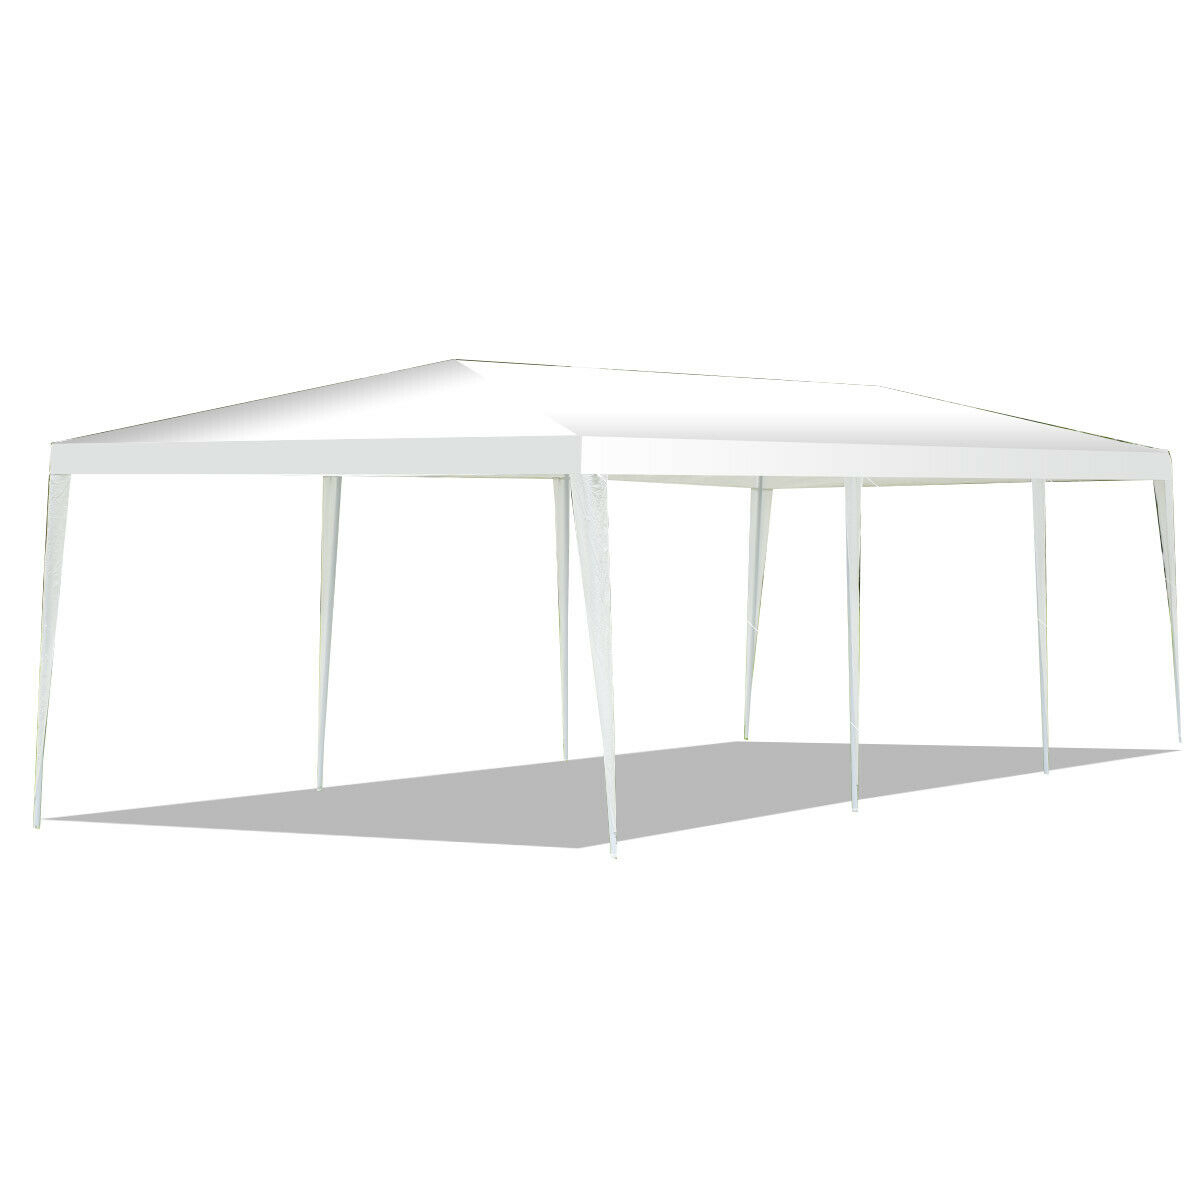 10' X 30' Outdoor Gazebo Canopy Wedding Party Patio Tent White